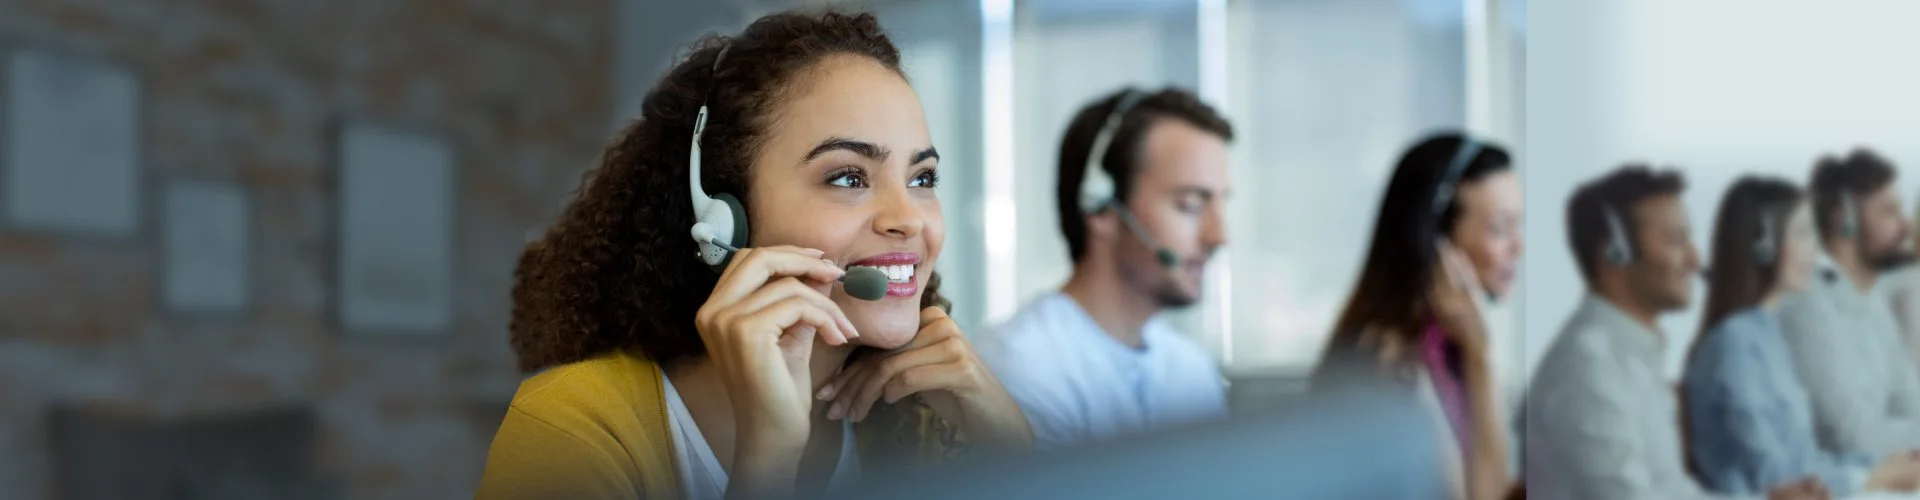 Call center agents using speech analytics to enhance the customer interaction